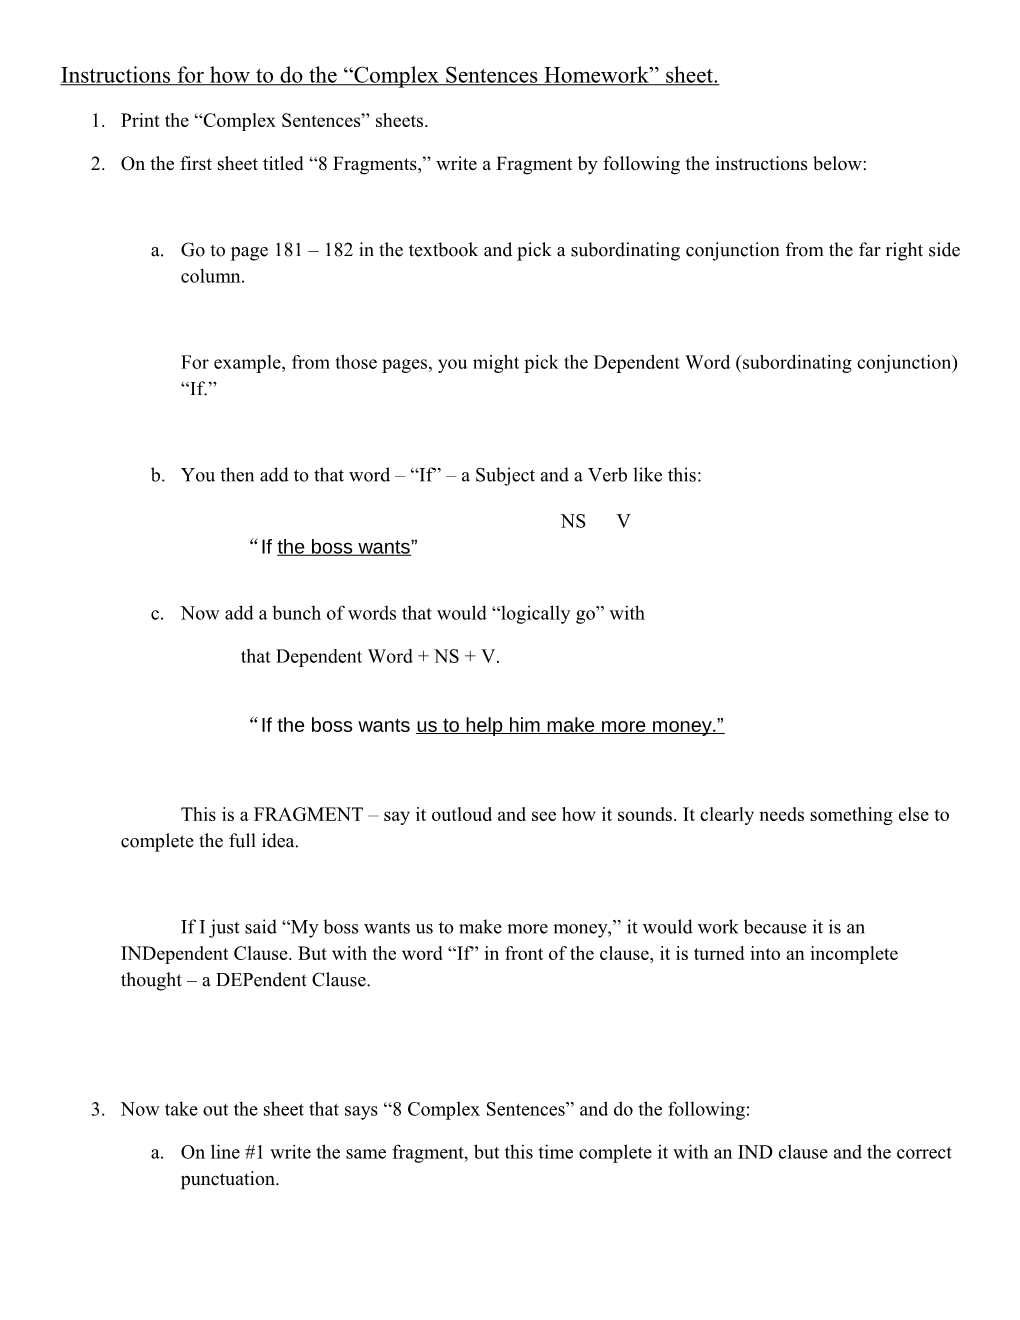 Instructions for How to Do the Complex Sentences Homework Sheet